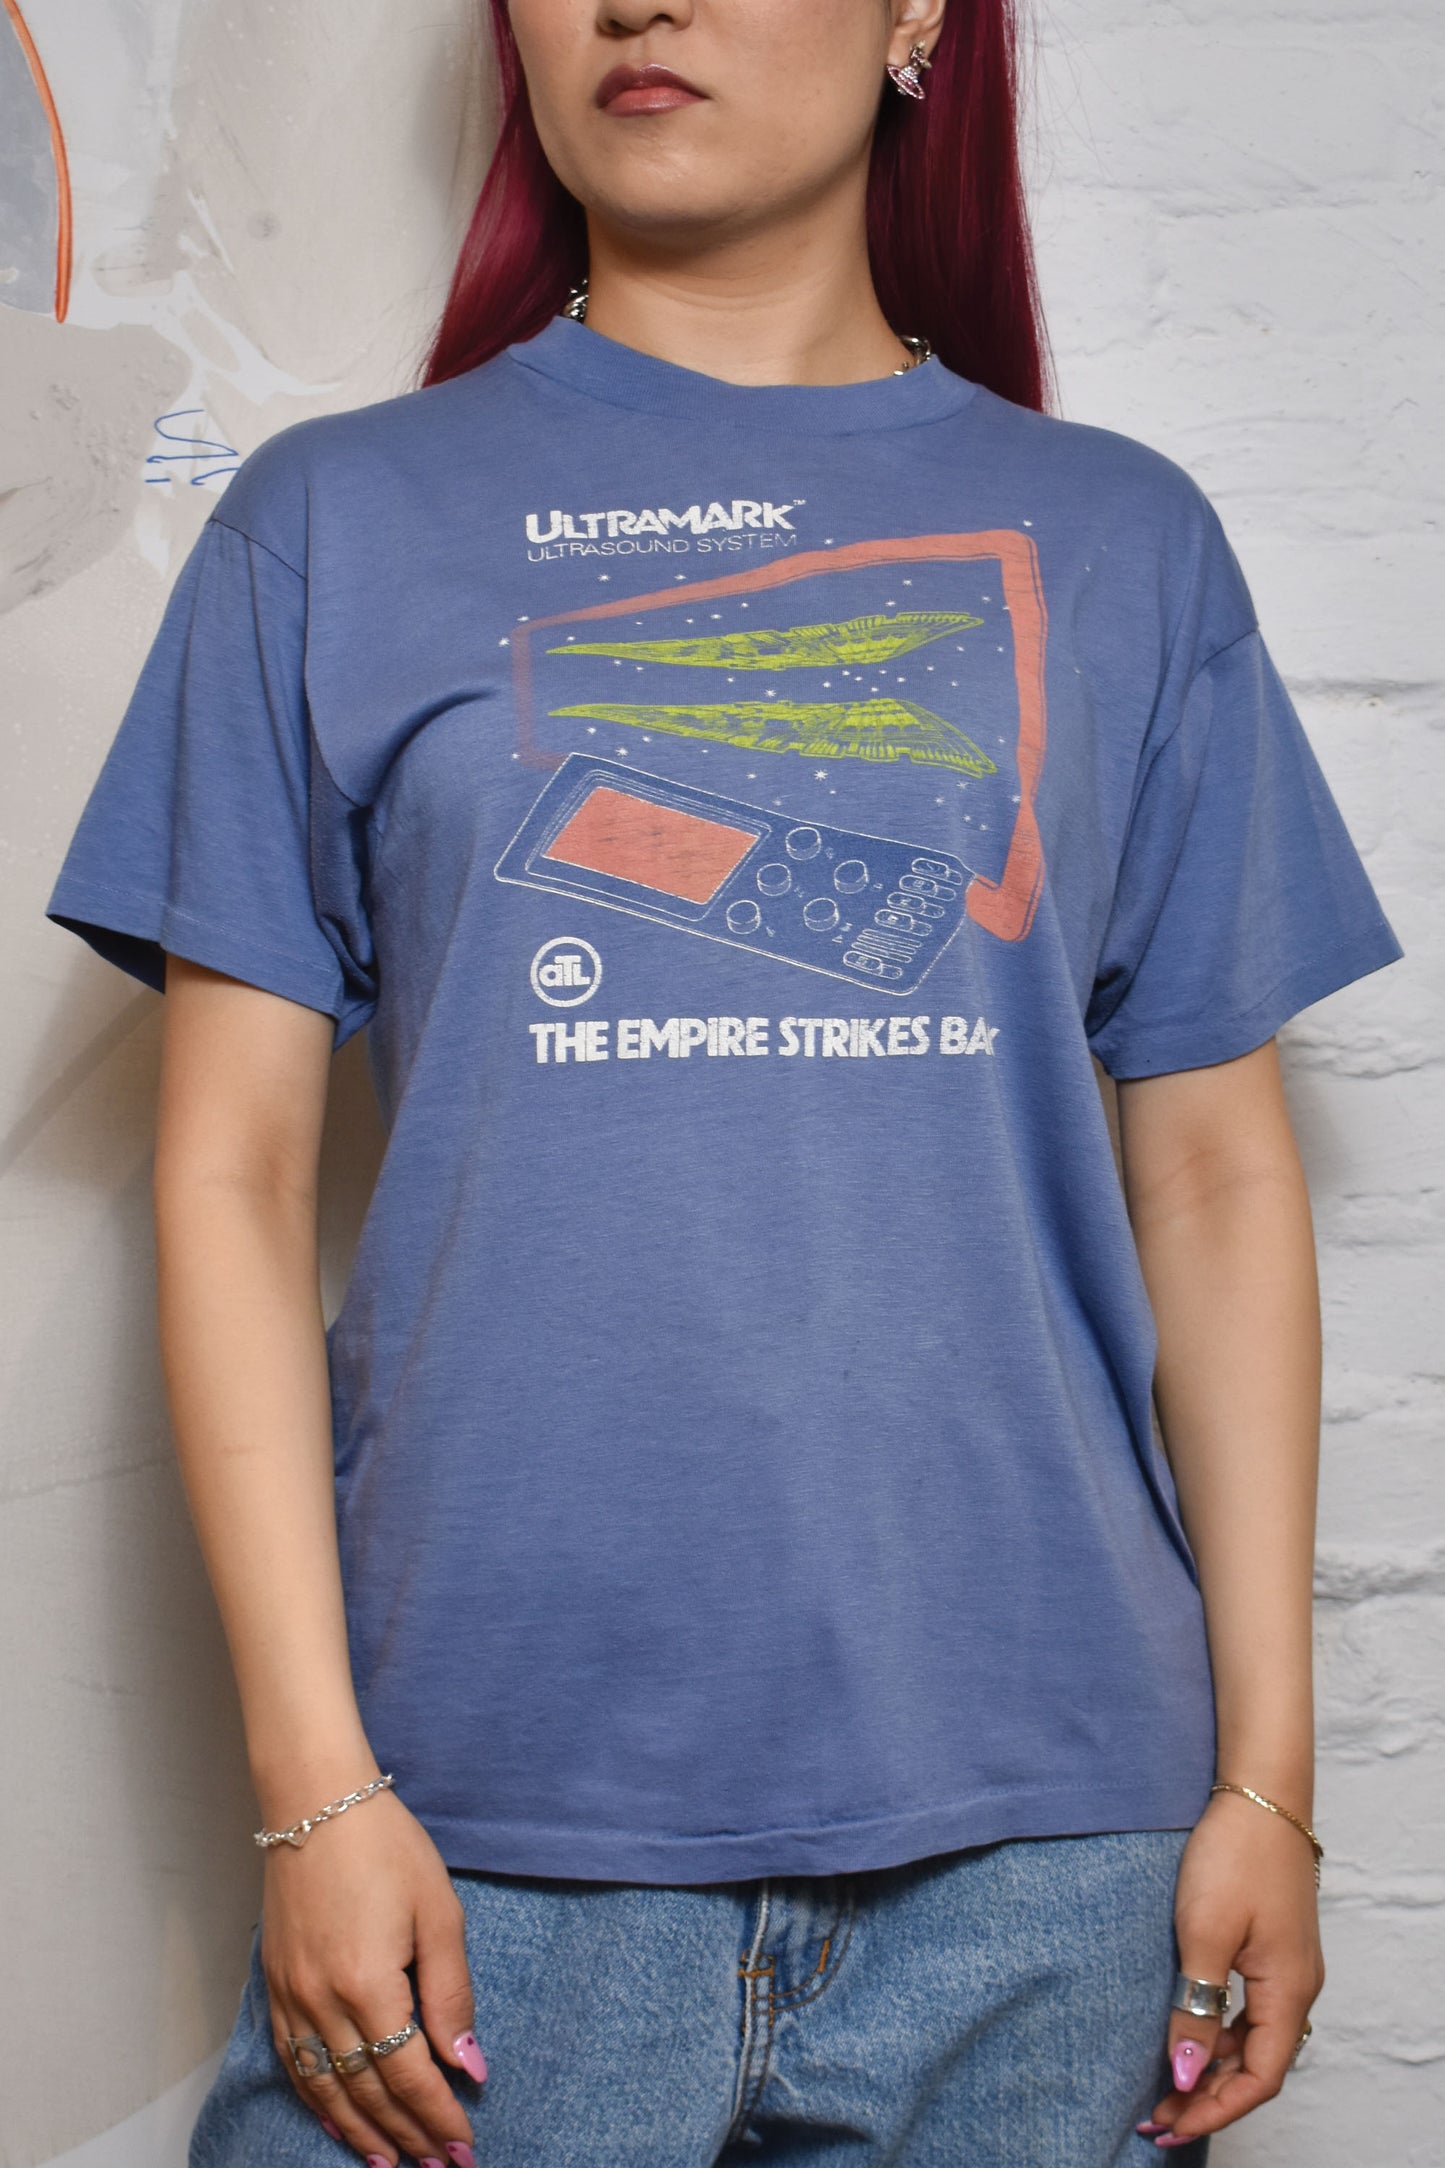 Vintage 80's Empire Strikes Back Ultramark Ultrasounds System T-shirt